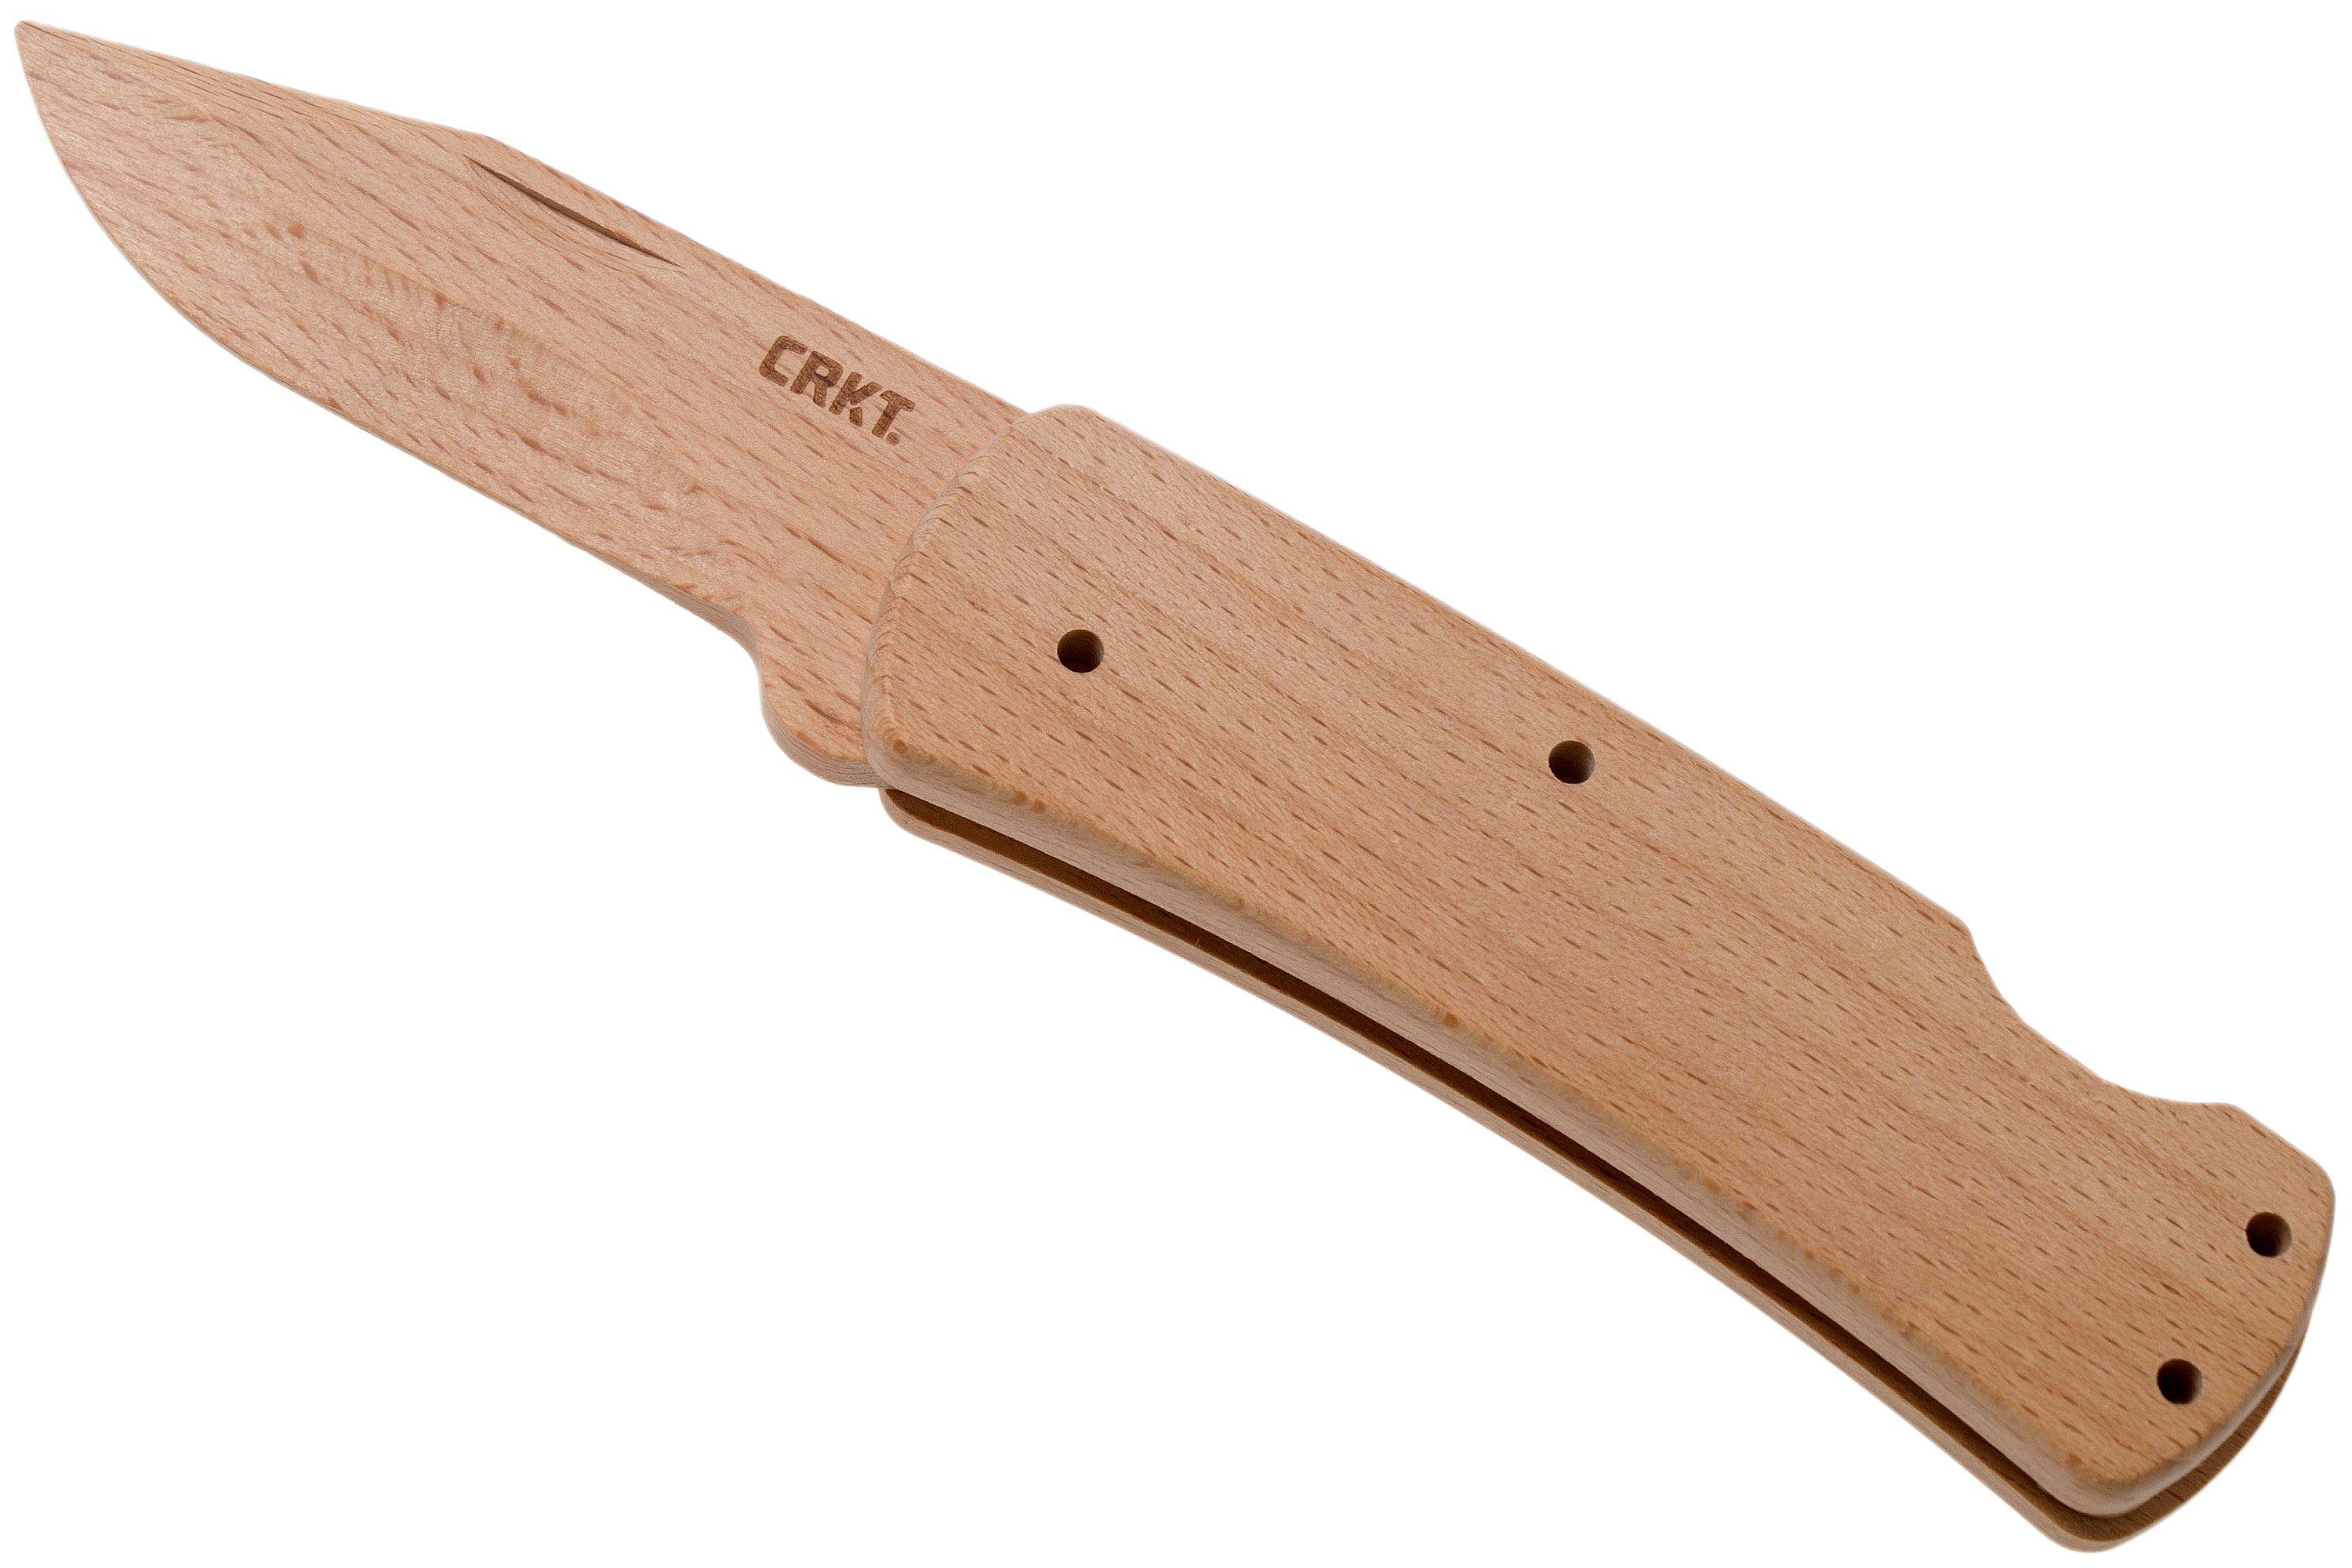 Nathan's Wood Knife Kit by CRKT at Fleet Farm